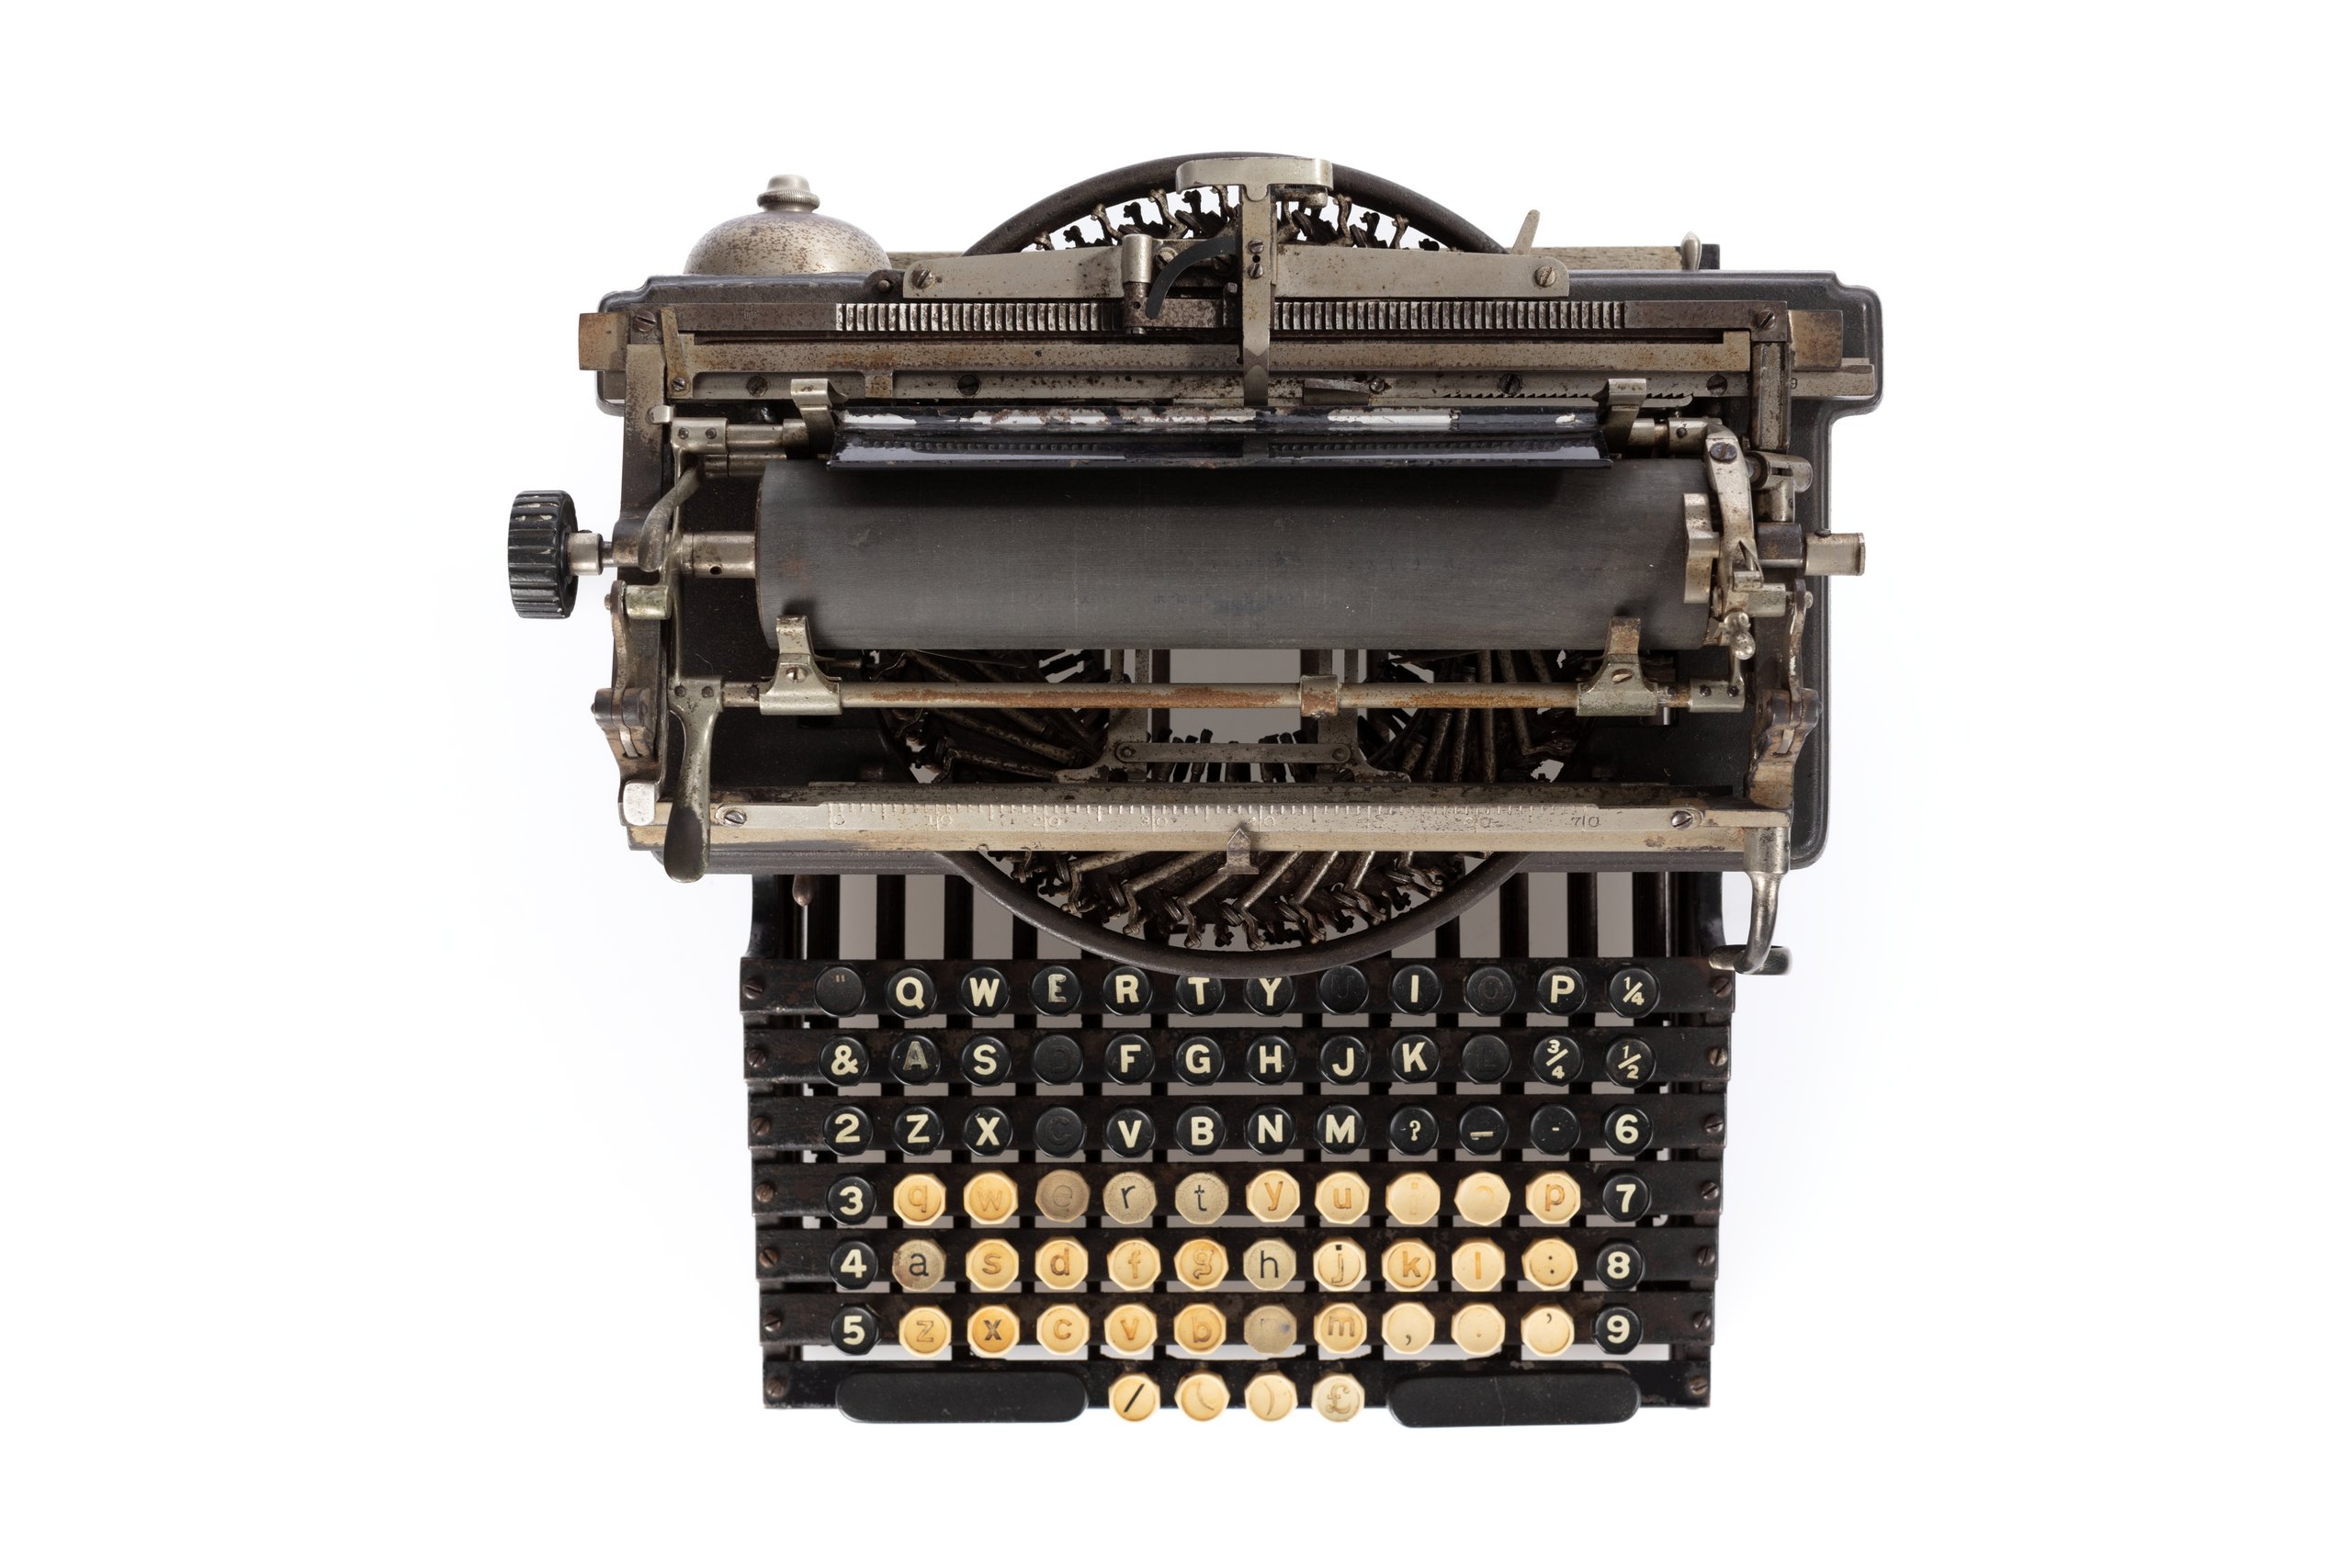 'Smith Premier No.1' typewriter